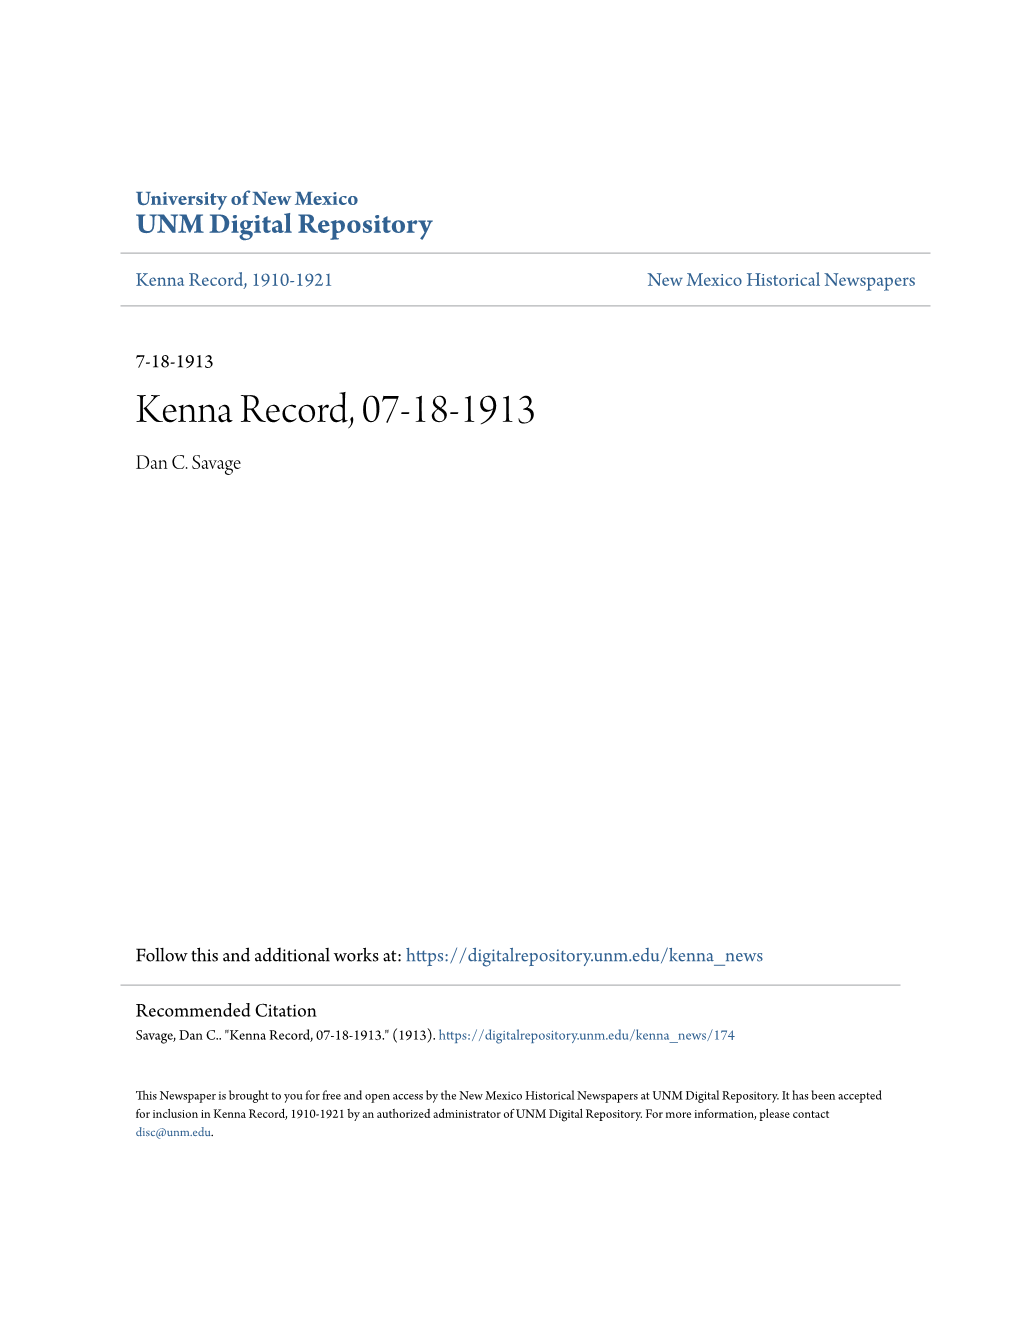 Kenna Record, 07-18-1913 Dan C